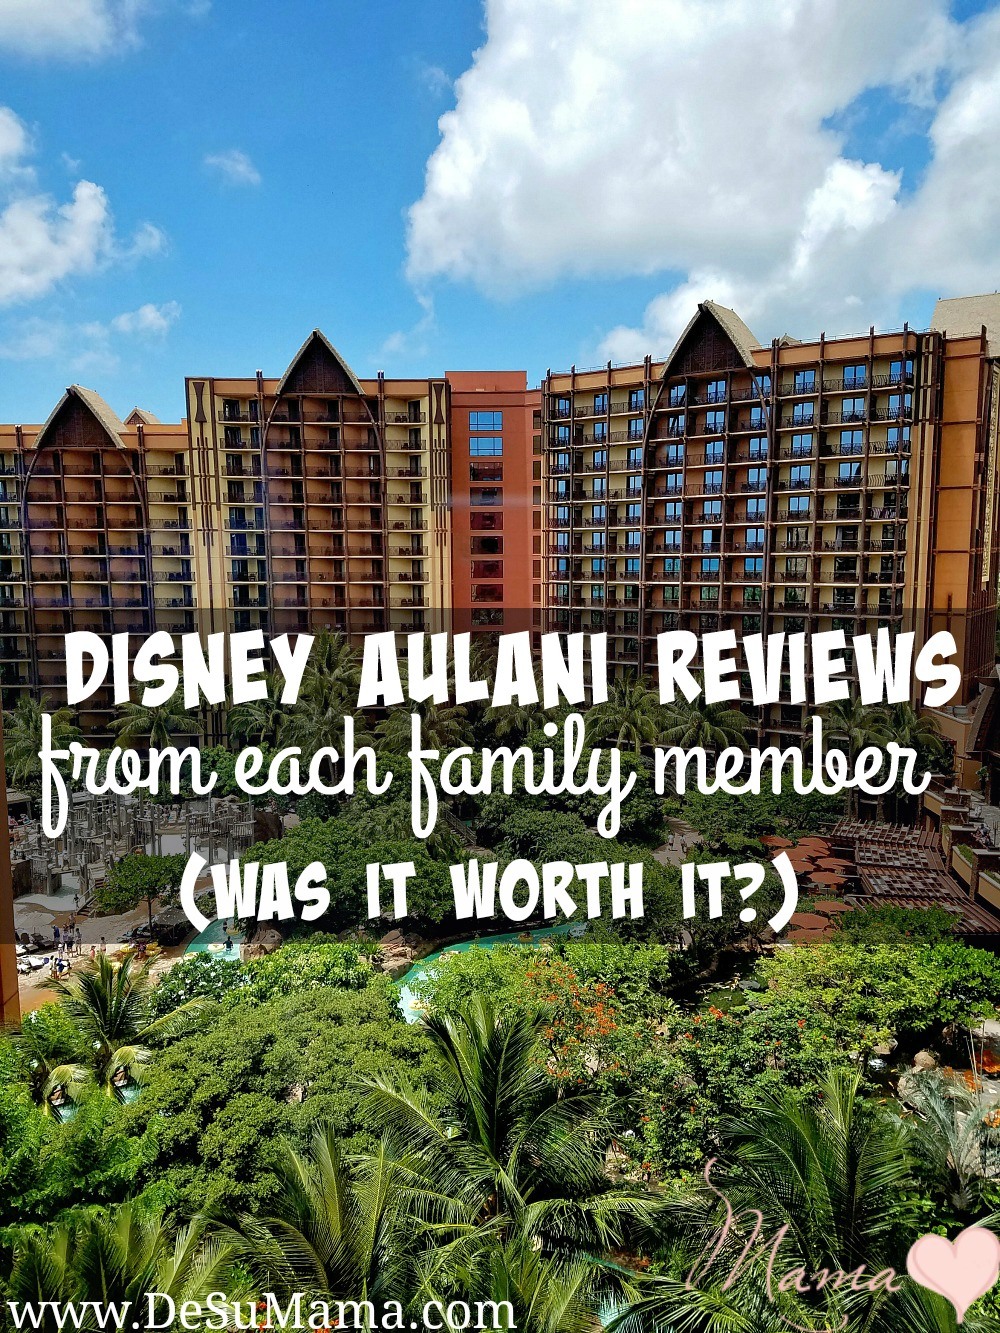 Disney Aulani Reviews For Family Travel